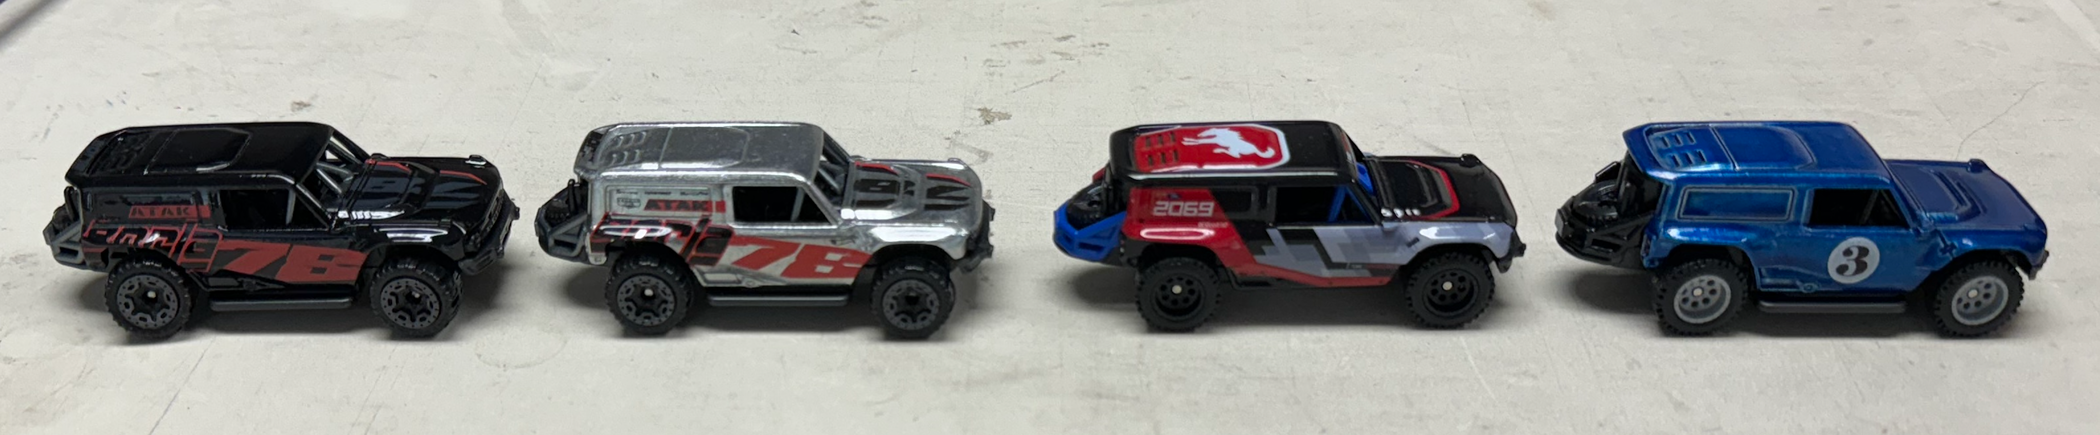 Ford Bronco Bronco Toys, Diecast, RC 1714414957527-v0